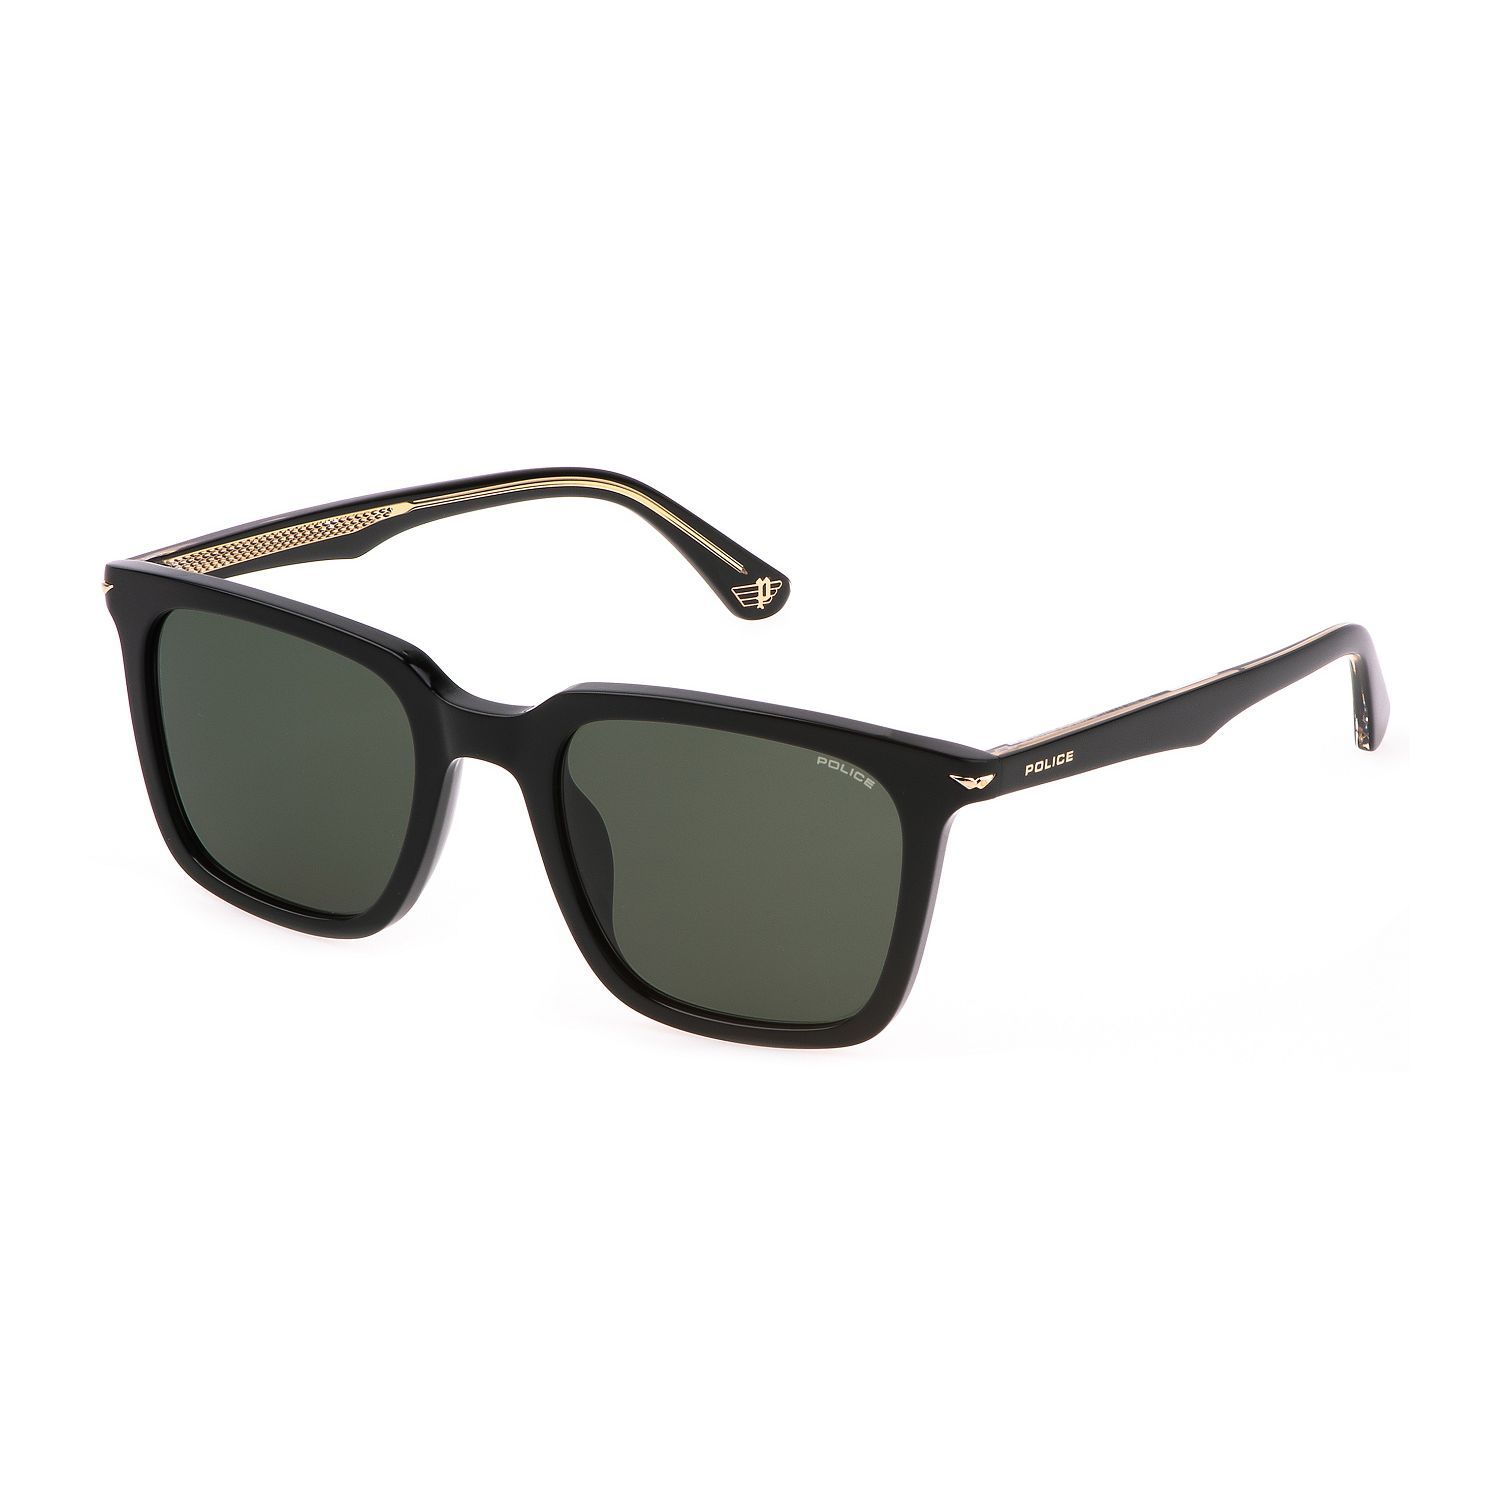 SPLL80M Square Sunglasses 0700 - size 52